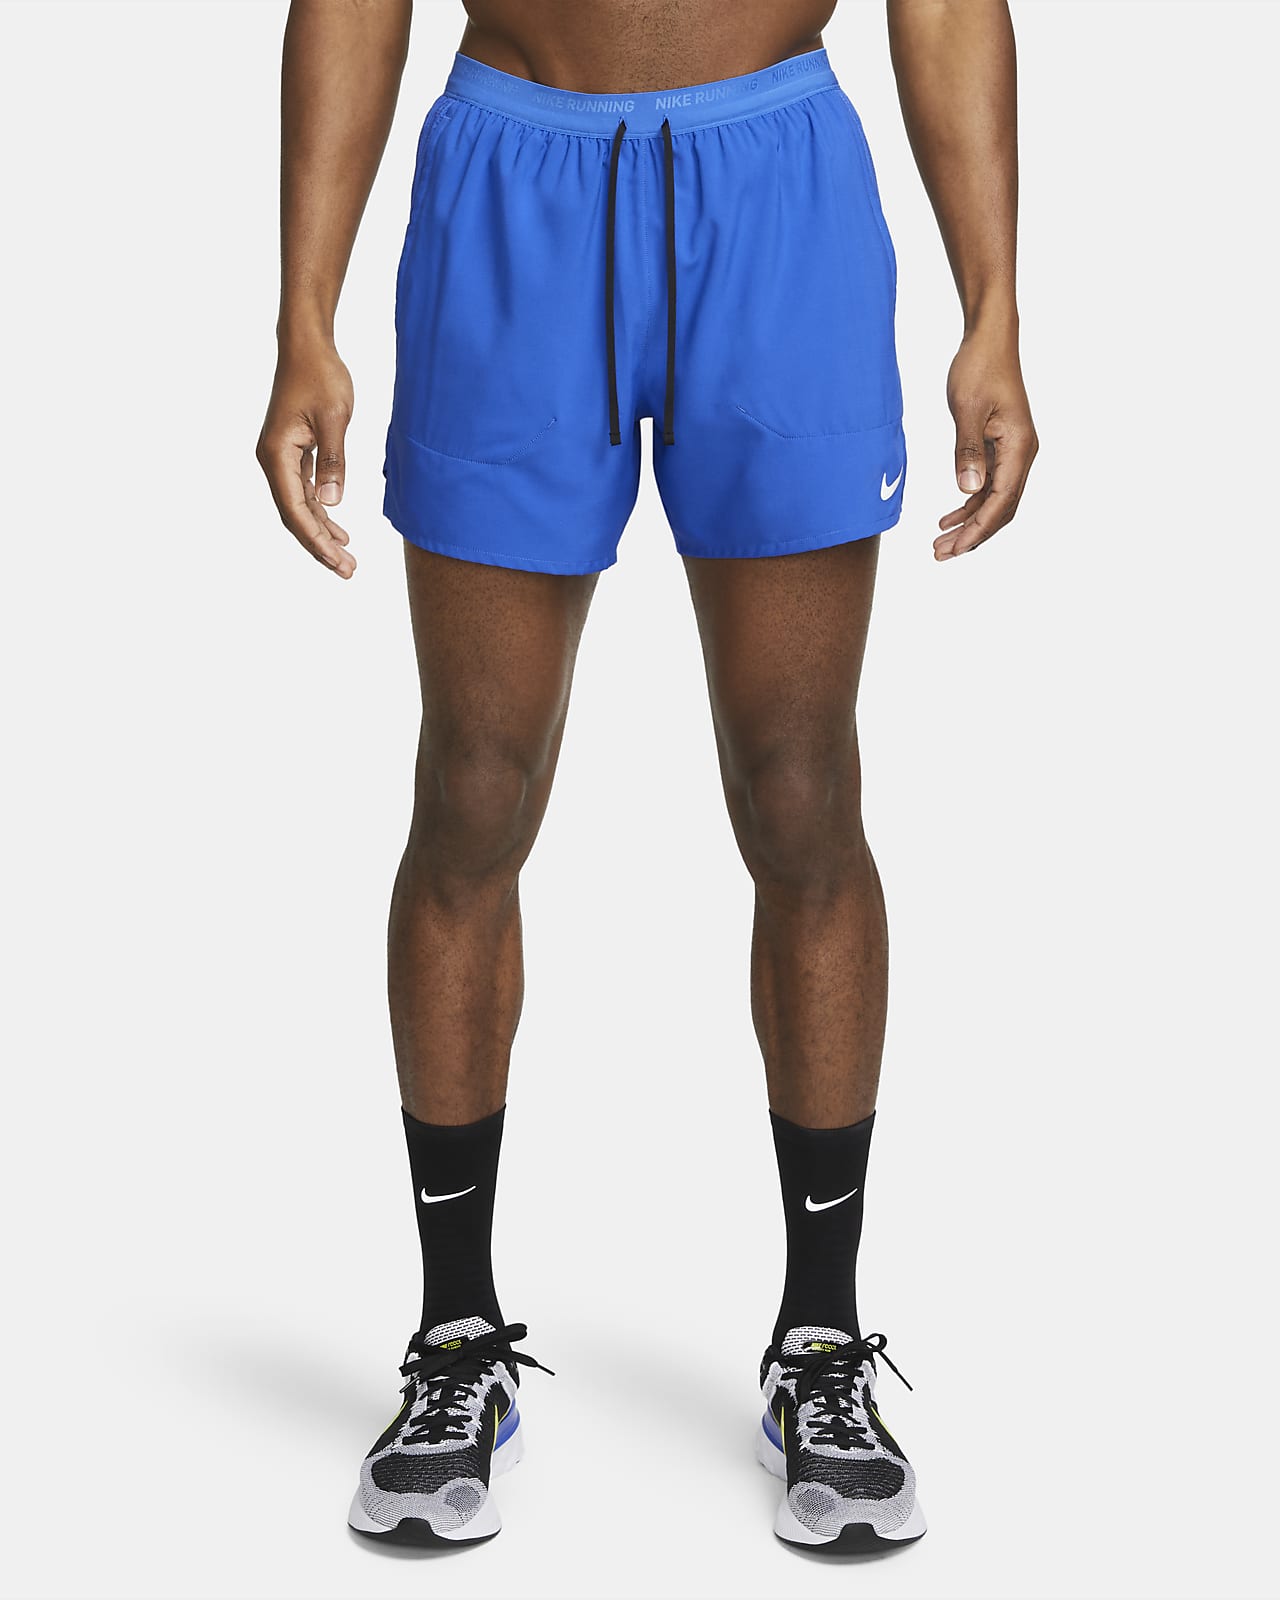 Pef Mansedumbre Cha Shorts de running con forro de ropa interior Dri-FIT de 12.5 cm para hombre  Nike Stride. Nike.com